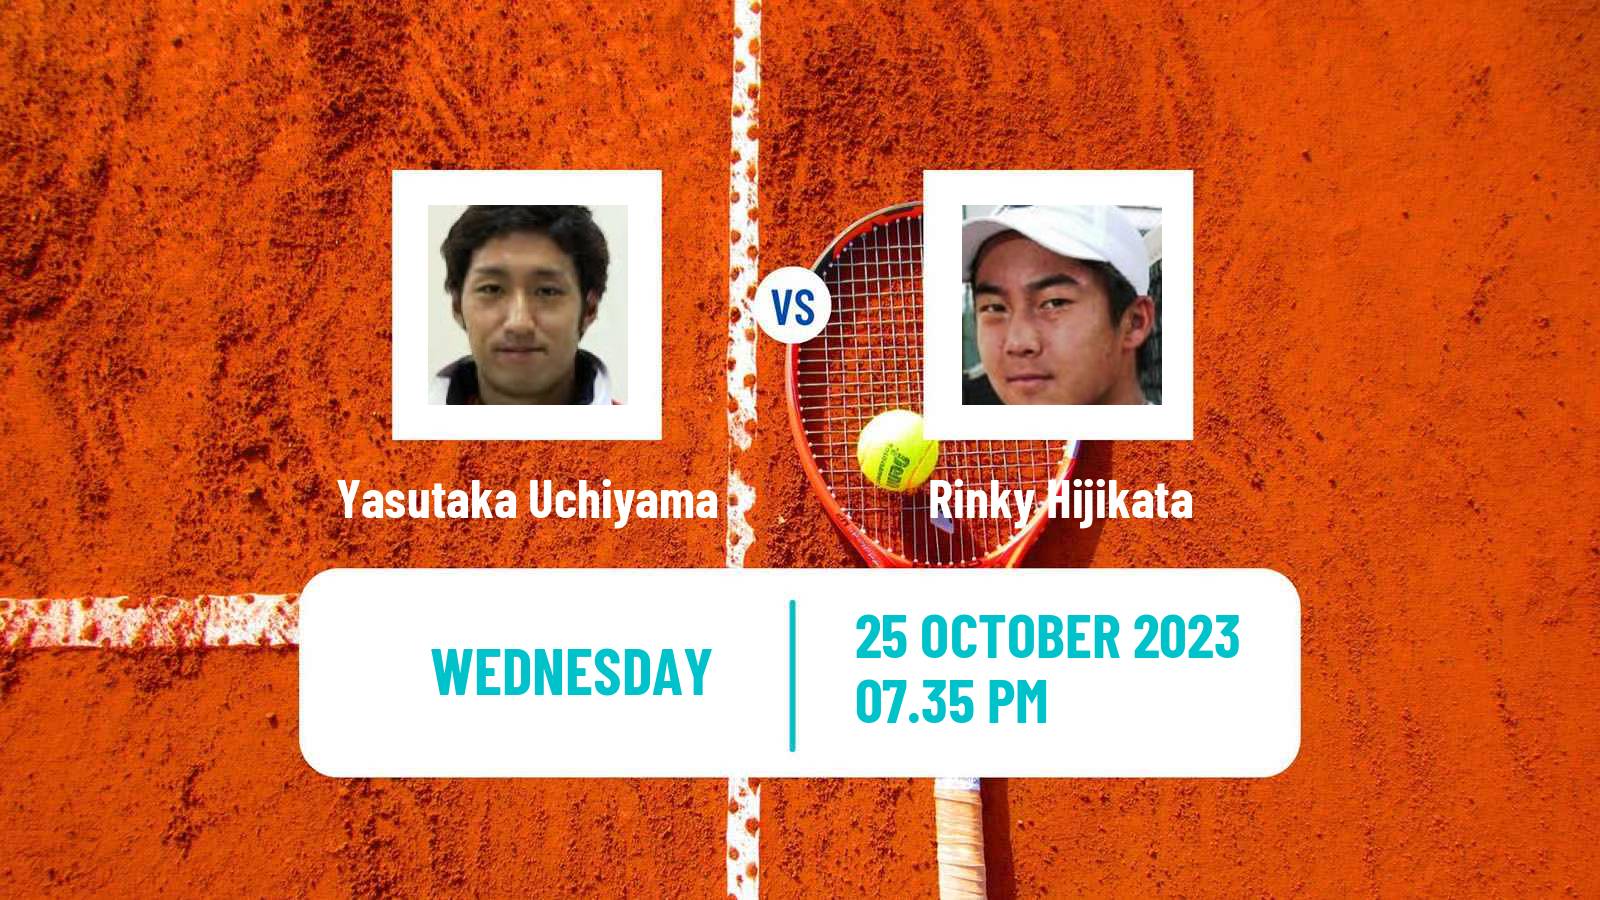 Tennis Playford 2 Challenger Men Yasutaka Uchiyama - Rinky Hijikata